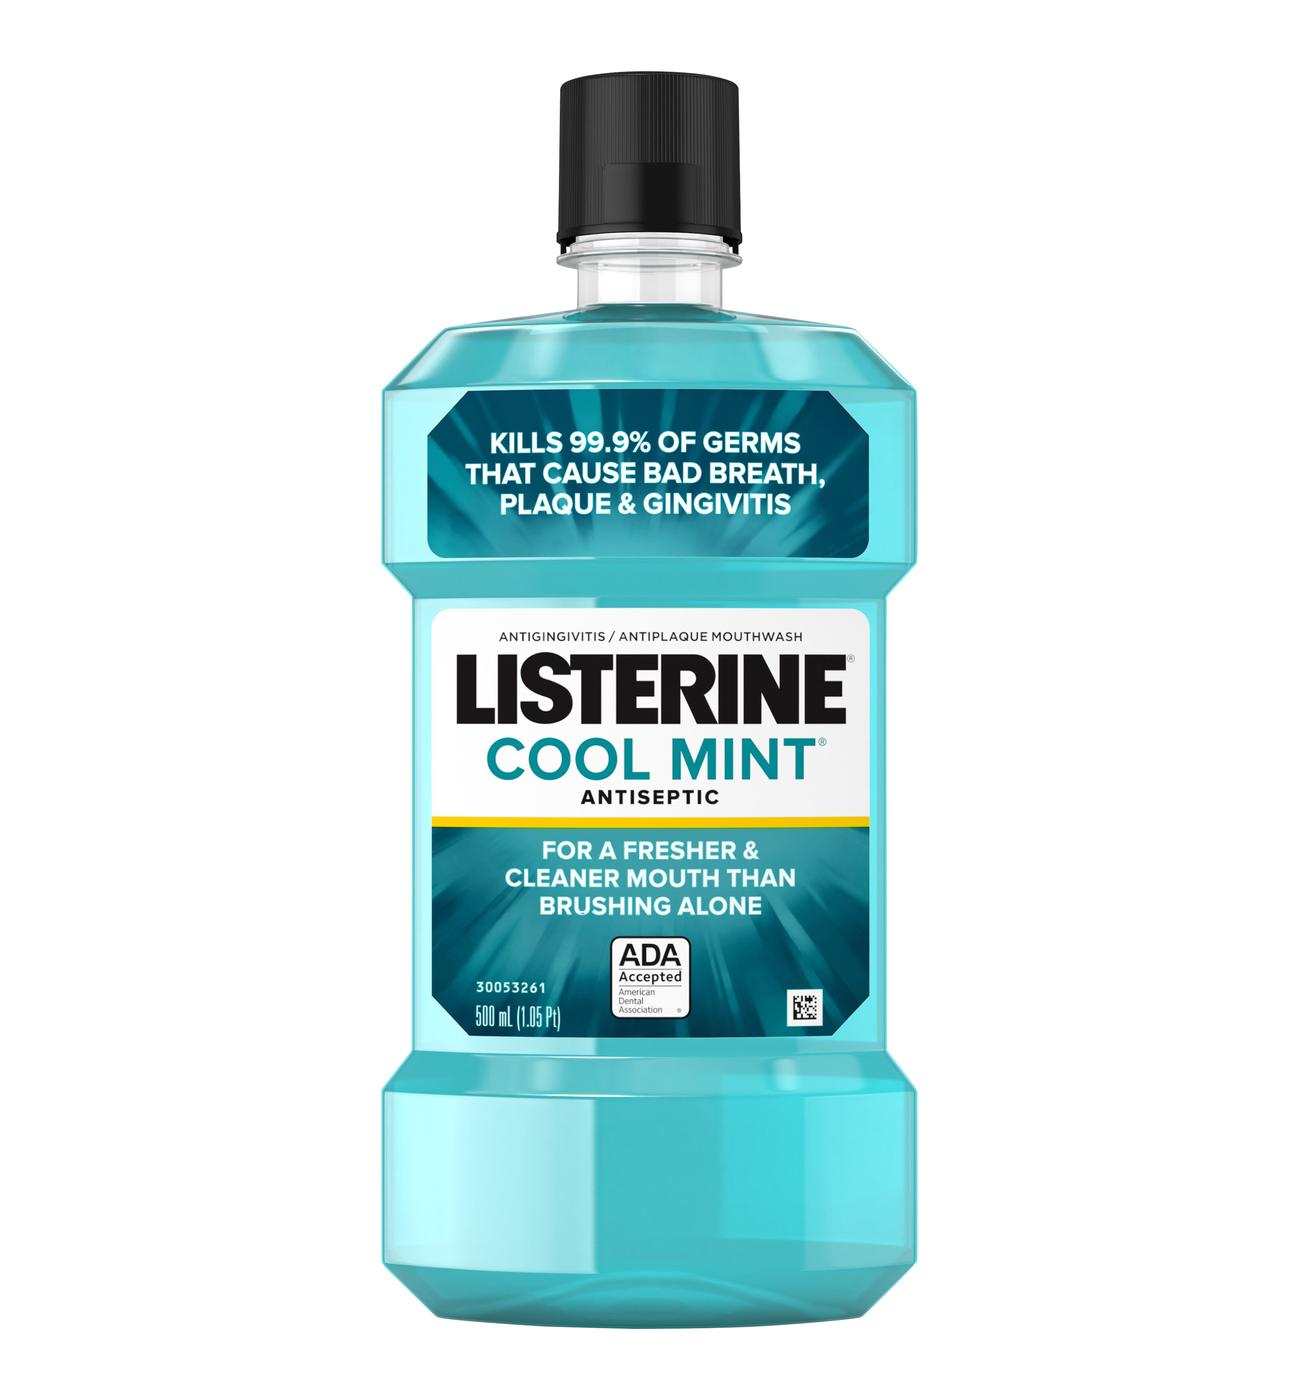 Listerine Cool Mint Antiseptic Mouthwash - Shop Mouthwash at H-E-B